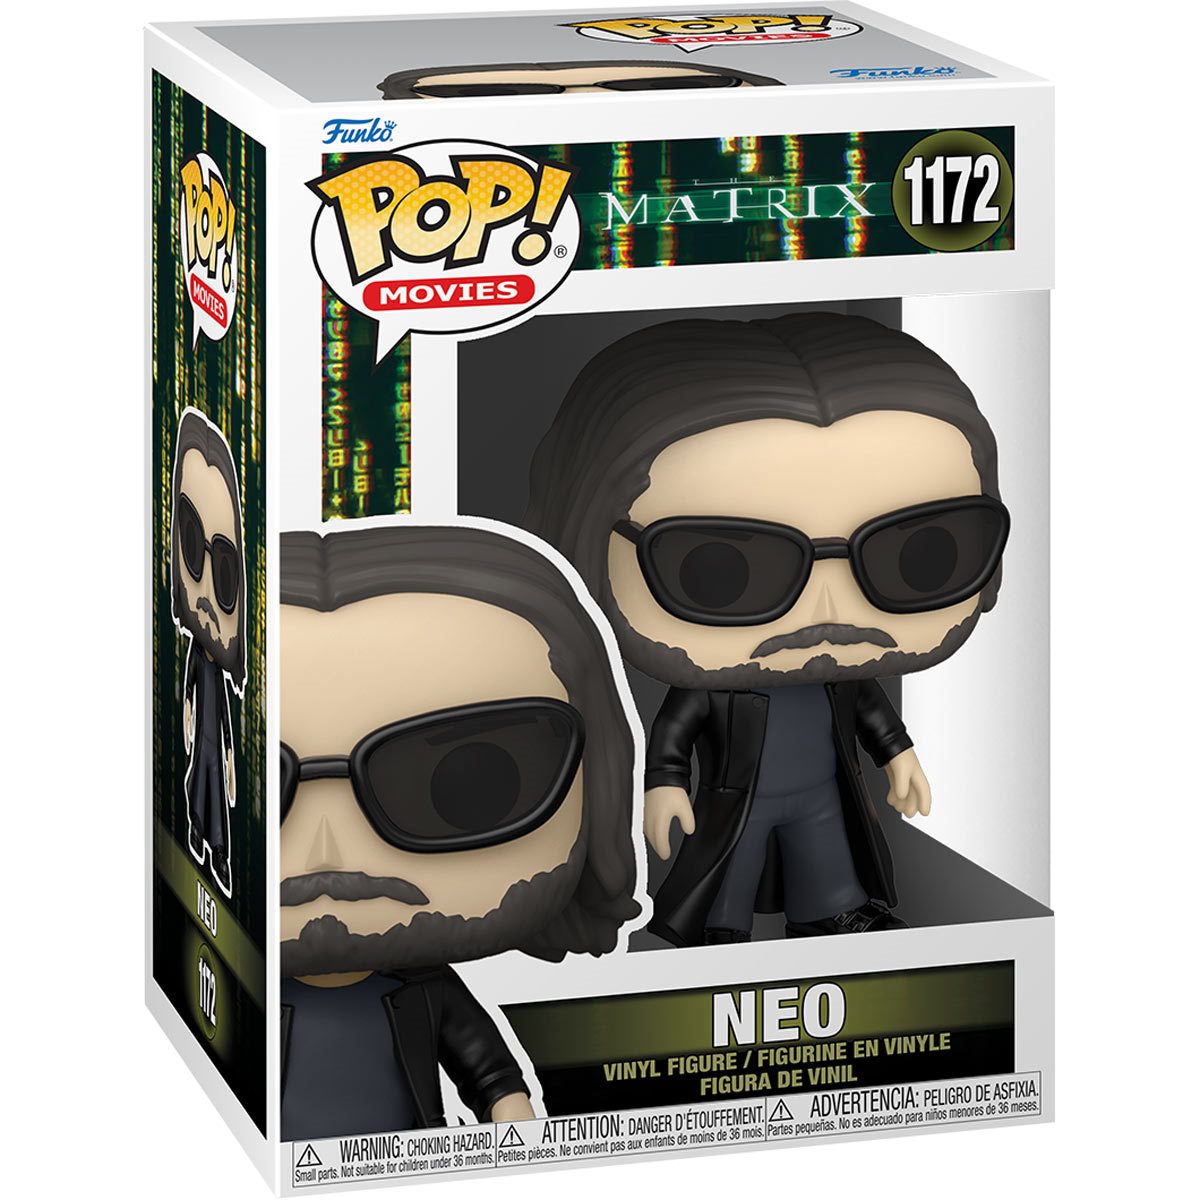 Neo The Matrix Pop! Vinyl Figure